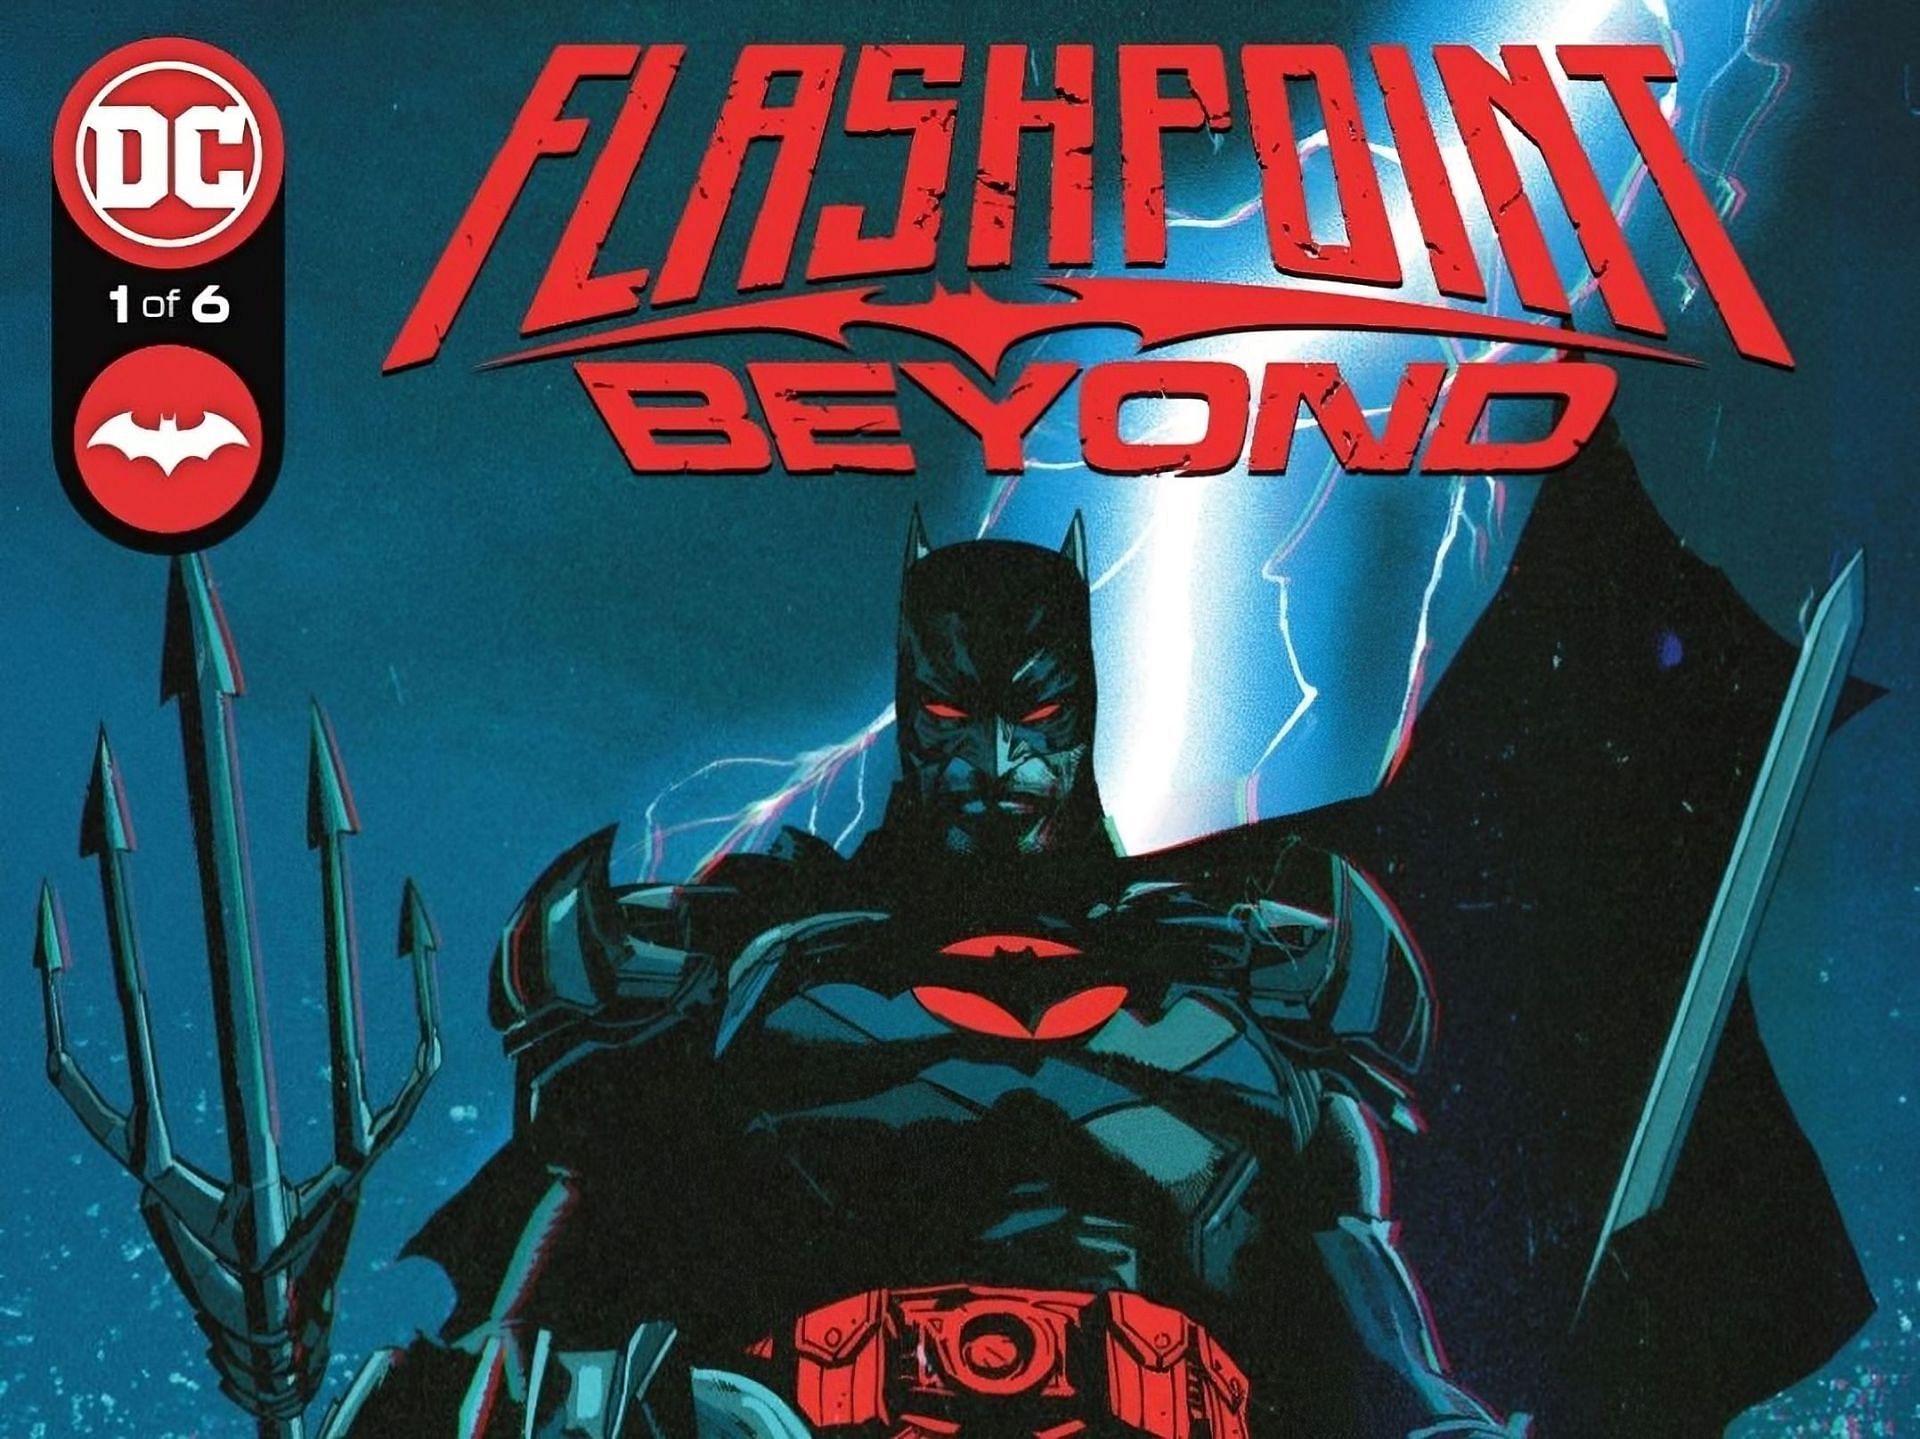 In Flashpoint Beyond, Thomas Wayne is the Batman, while Martha Wayne has turned into the Joker (Image via DC Comics)